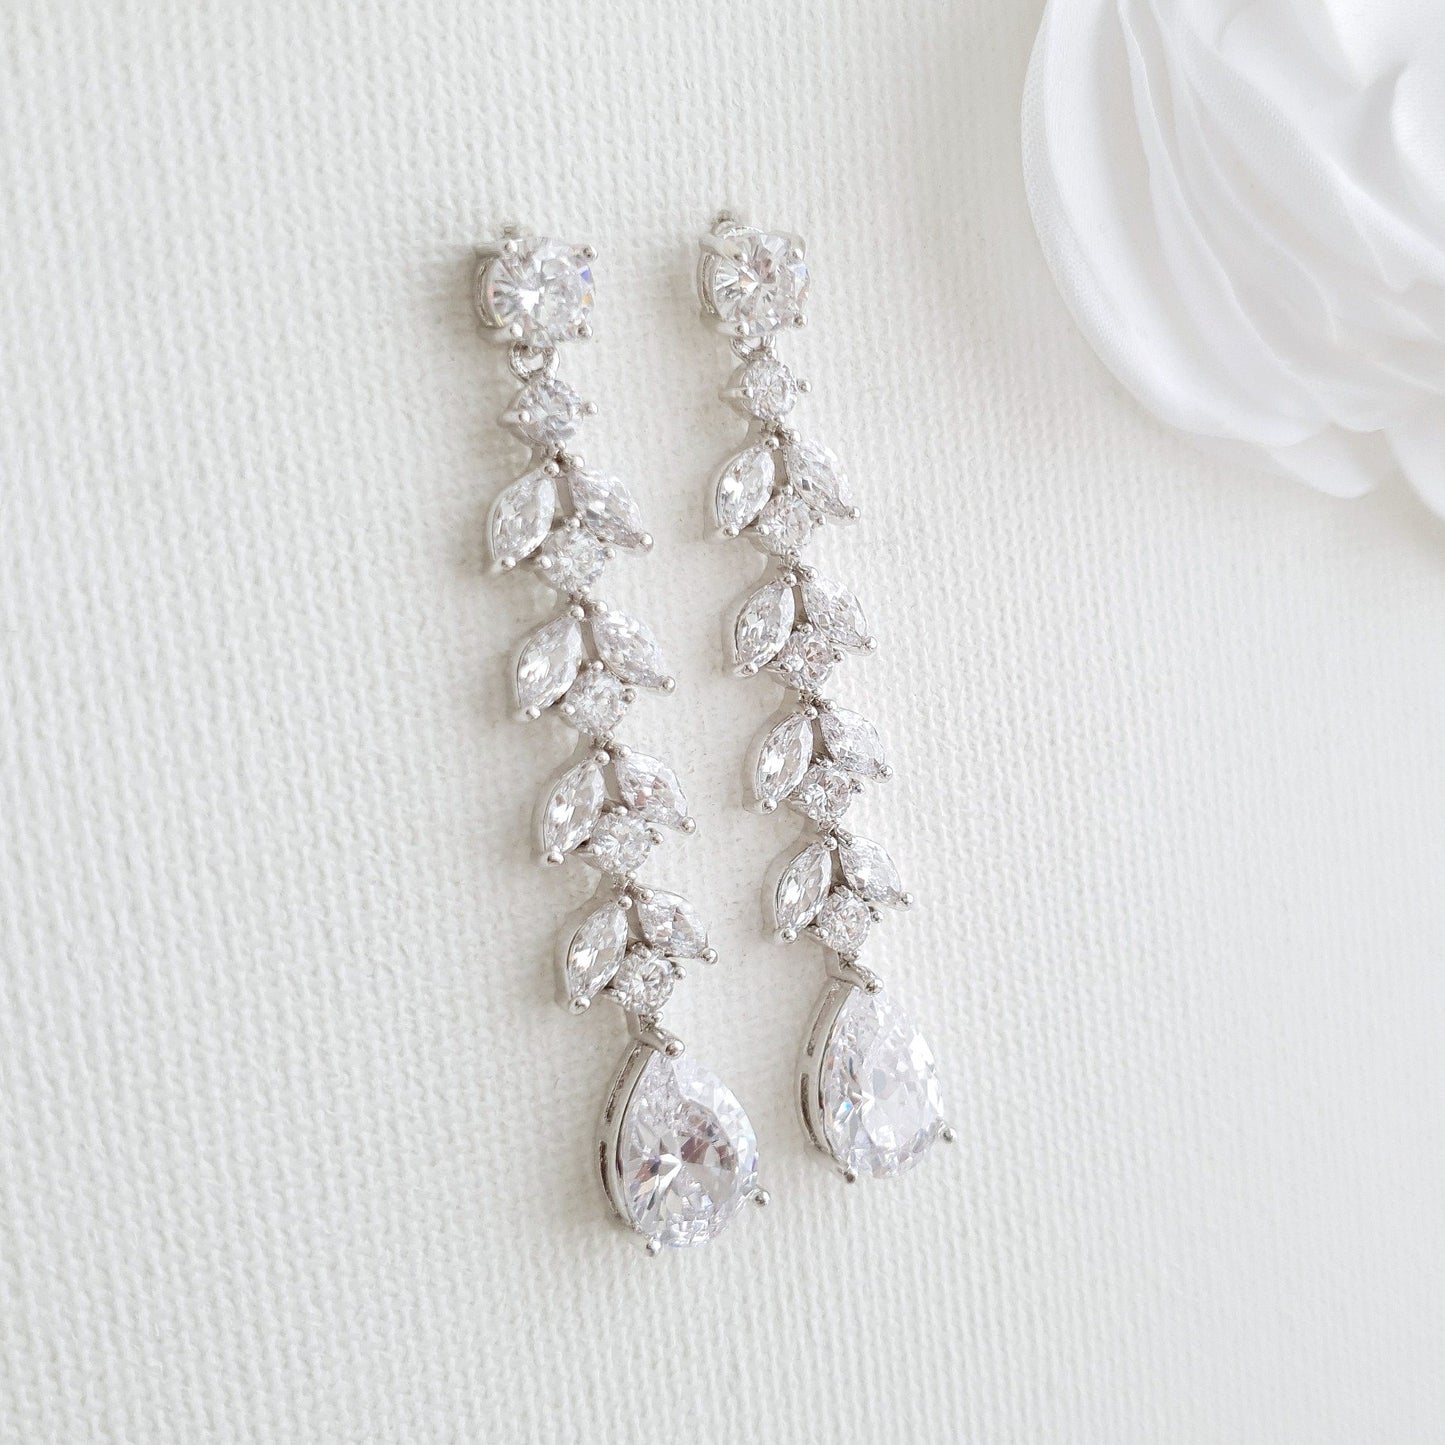 Bride Earrings in Marquise Cubic Zirconia Crystals - Poetry Designs 